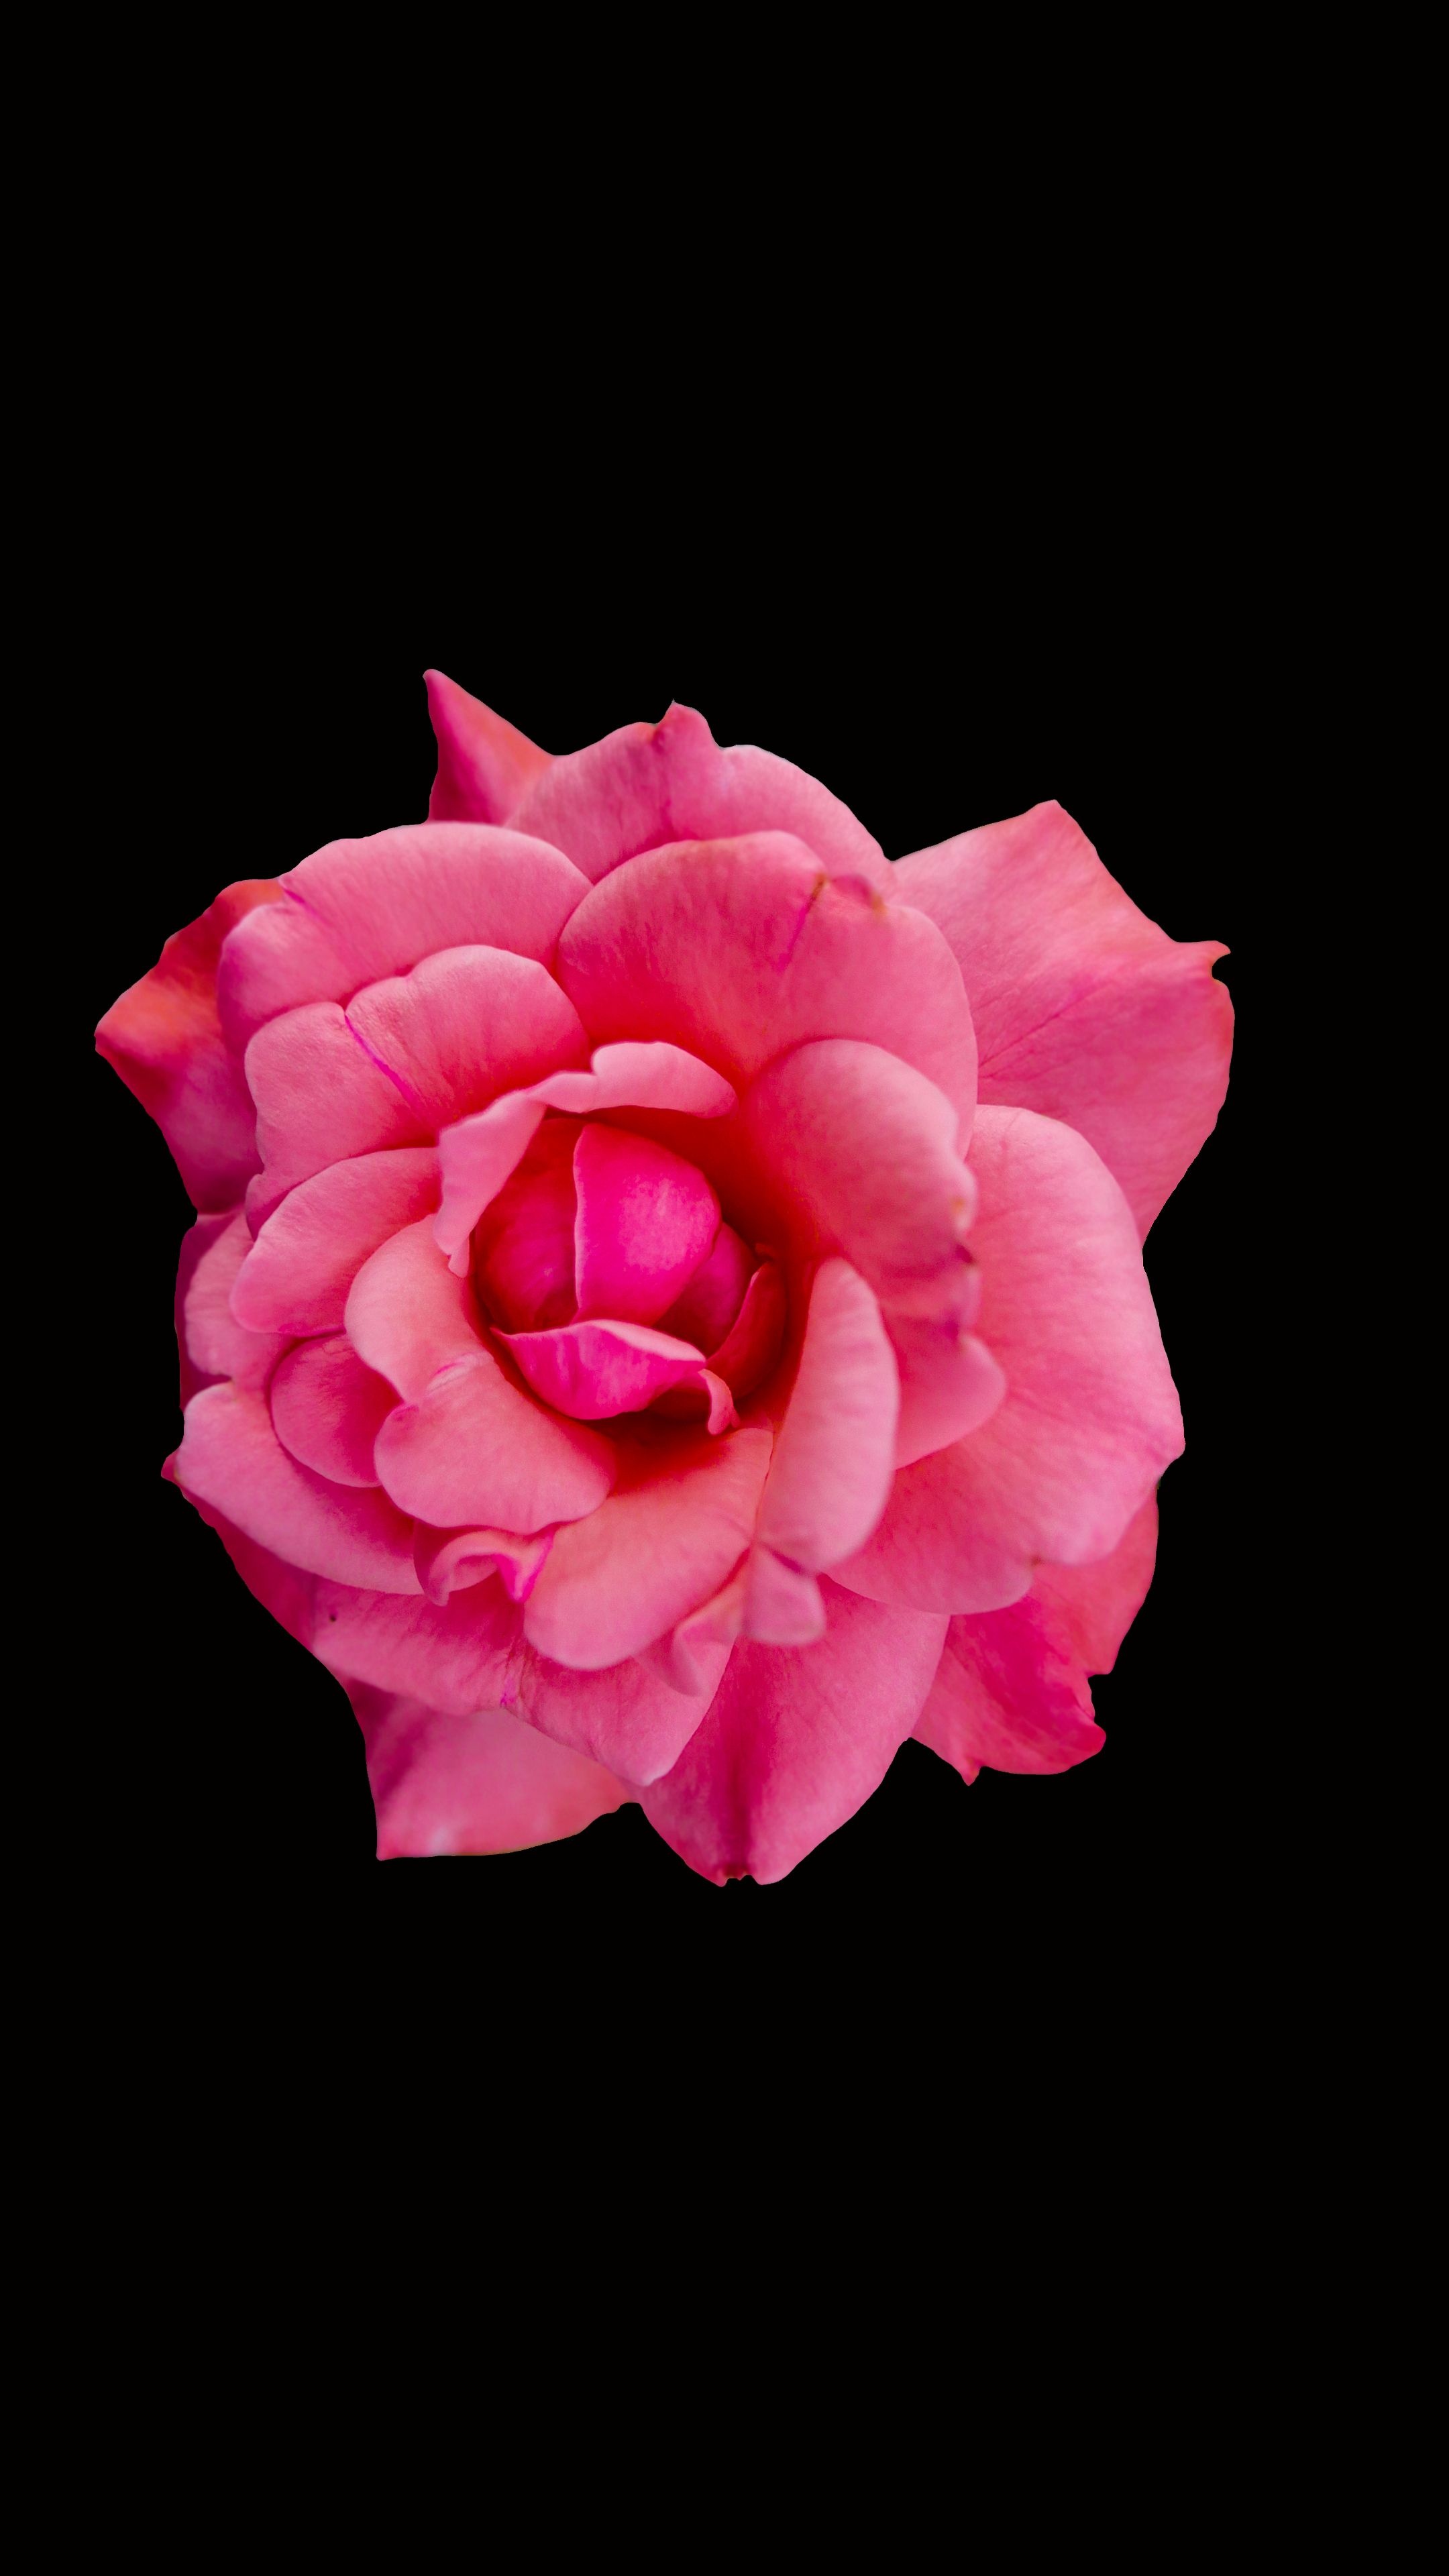 Rose flower wallpaper, 4K background, Floral inspiration, Petal beauty, 2160x3840 4K Handy